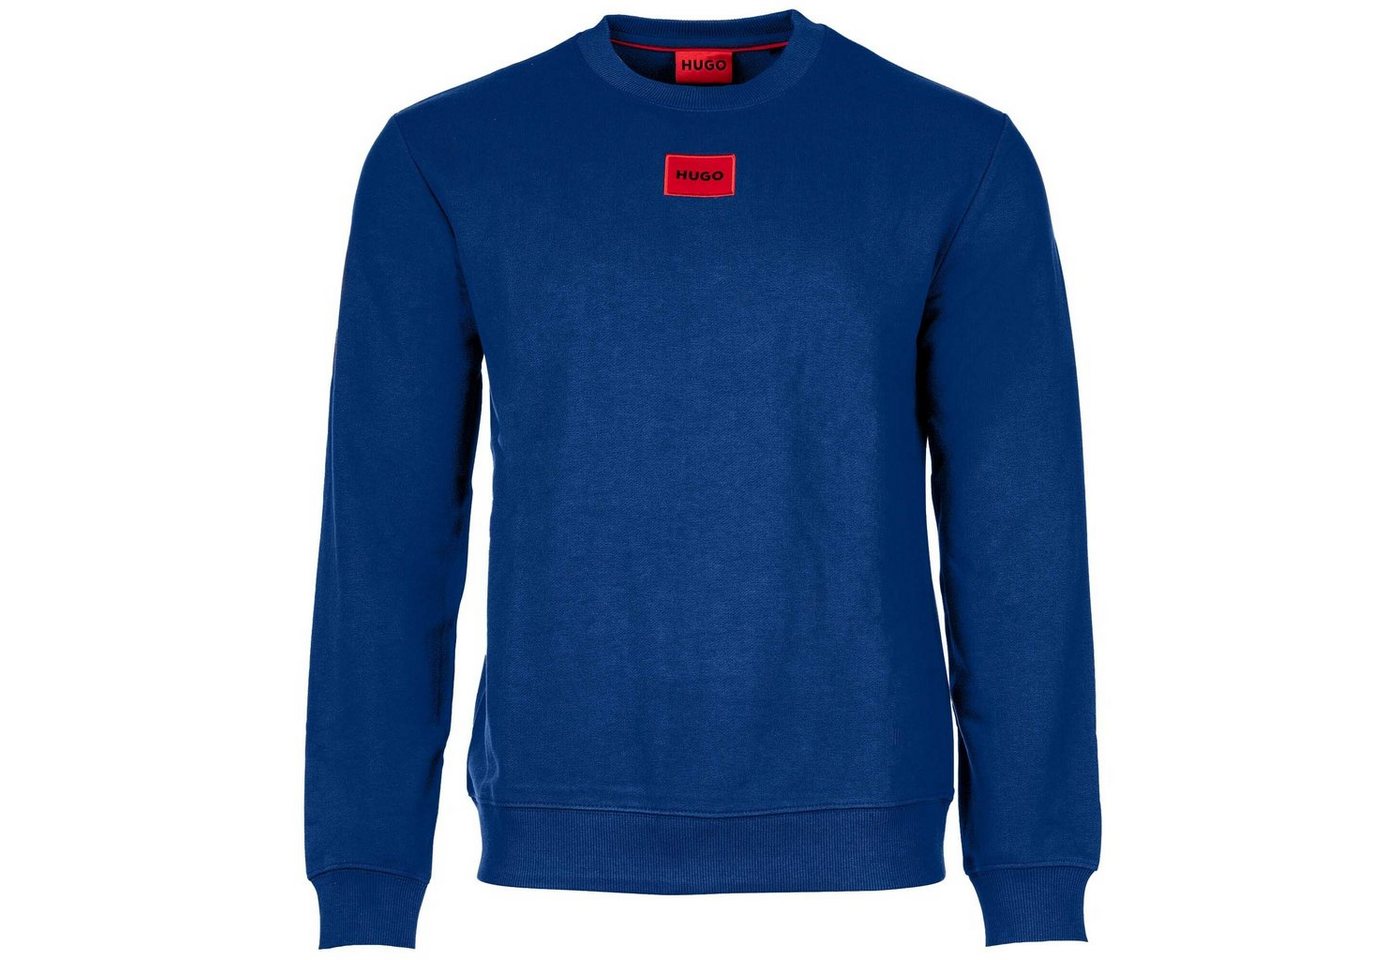 HUGO Sweatshirt Herren Sweater, Diragol212 - Sweatshirt, Rundhals von HUGO